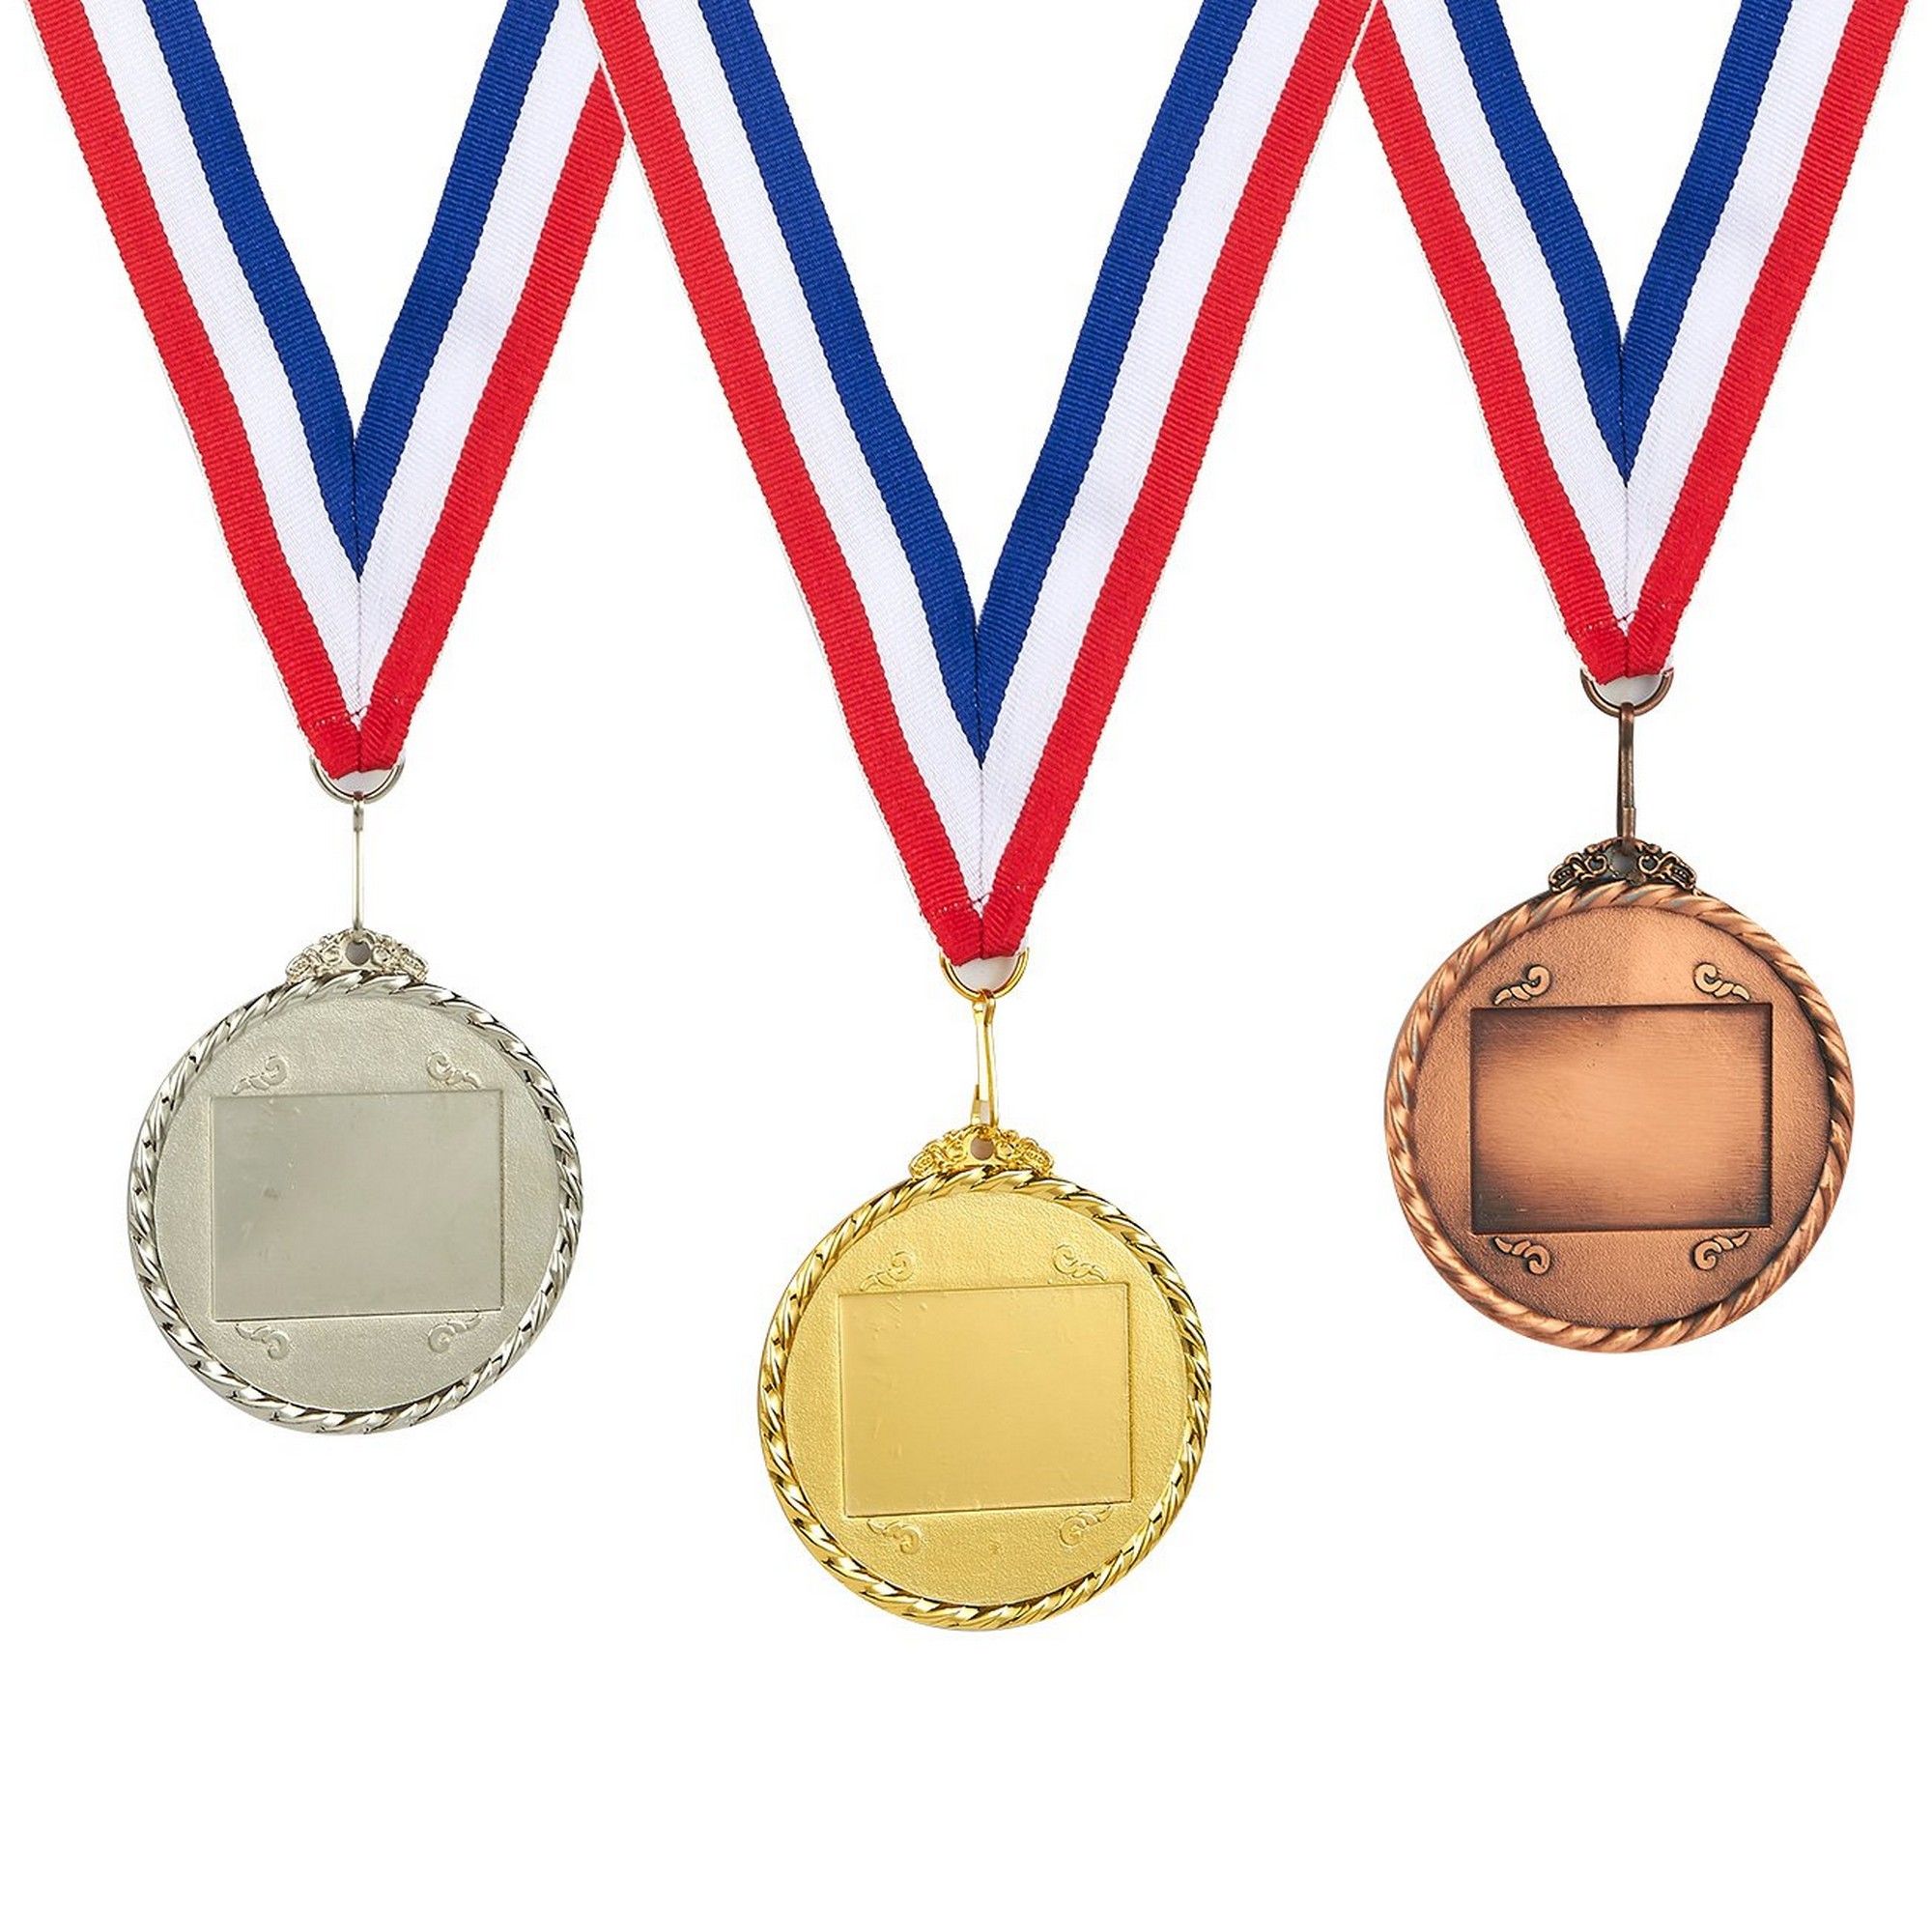 Windows medals. Gold Silver Bronze medalists. Медаль. Медали спортивные. Медаль winner.